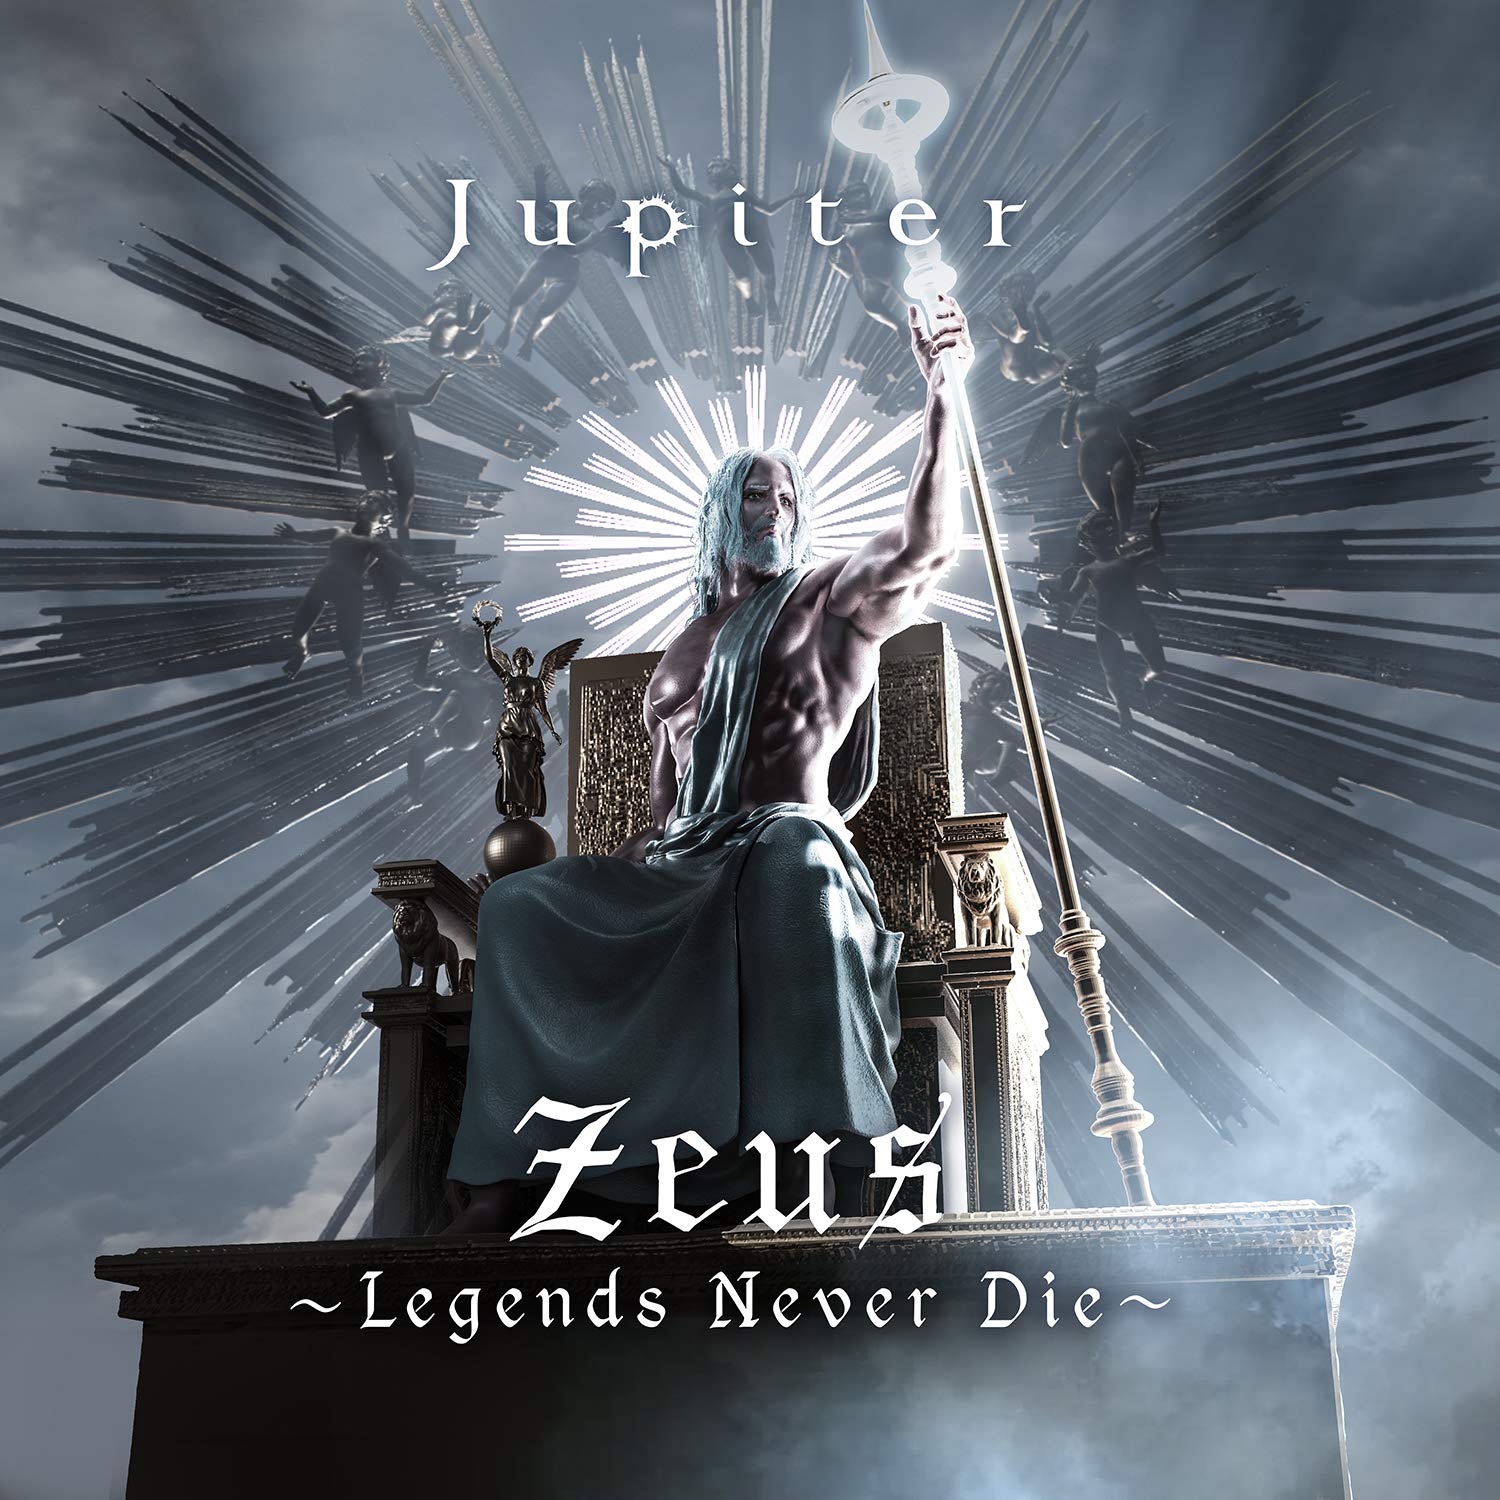 JupiterのZeus 〜Legends Never Die〜ジャケット